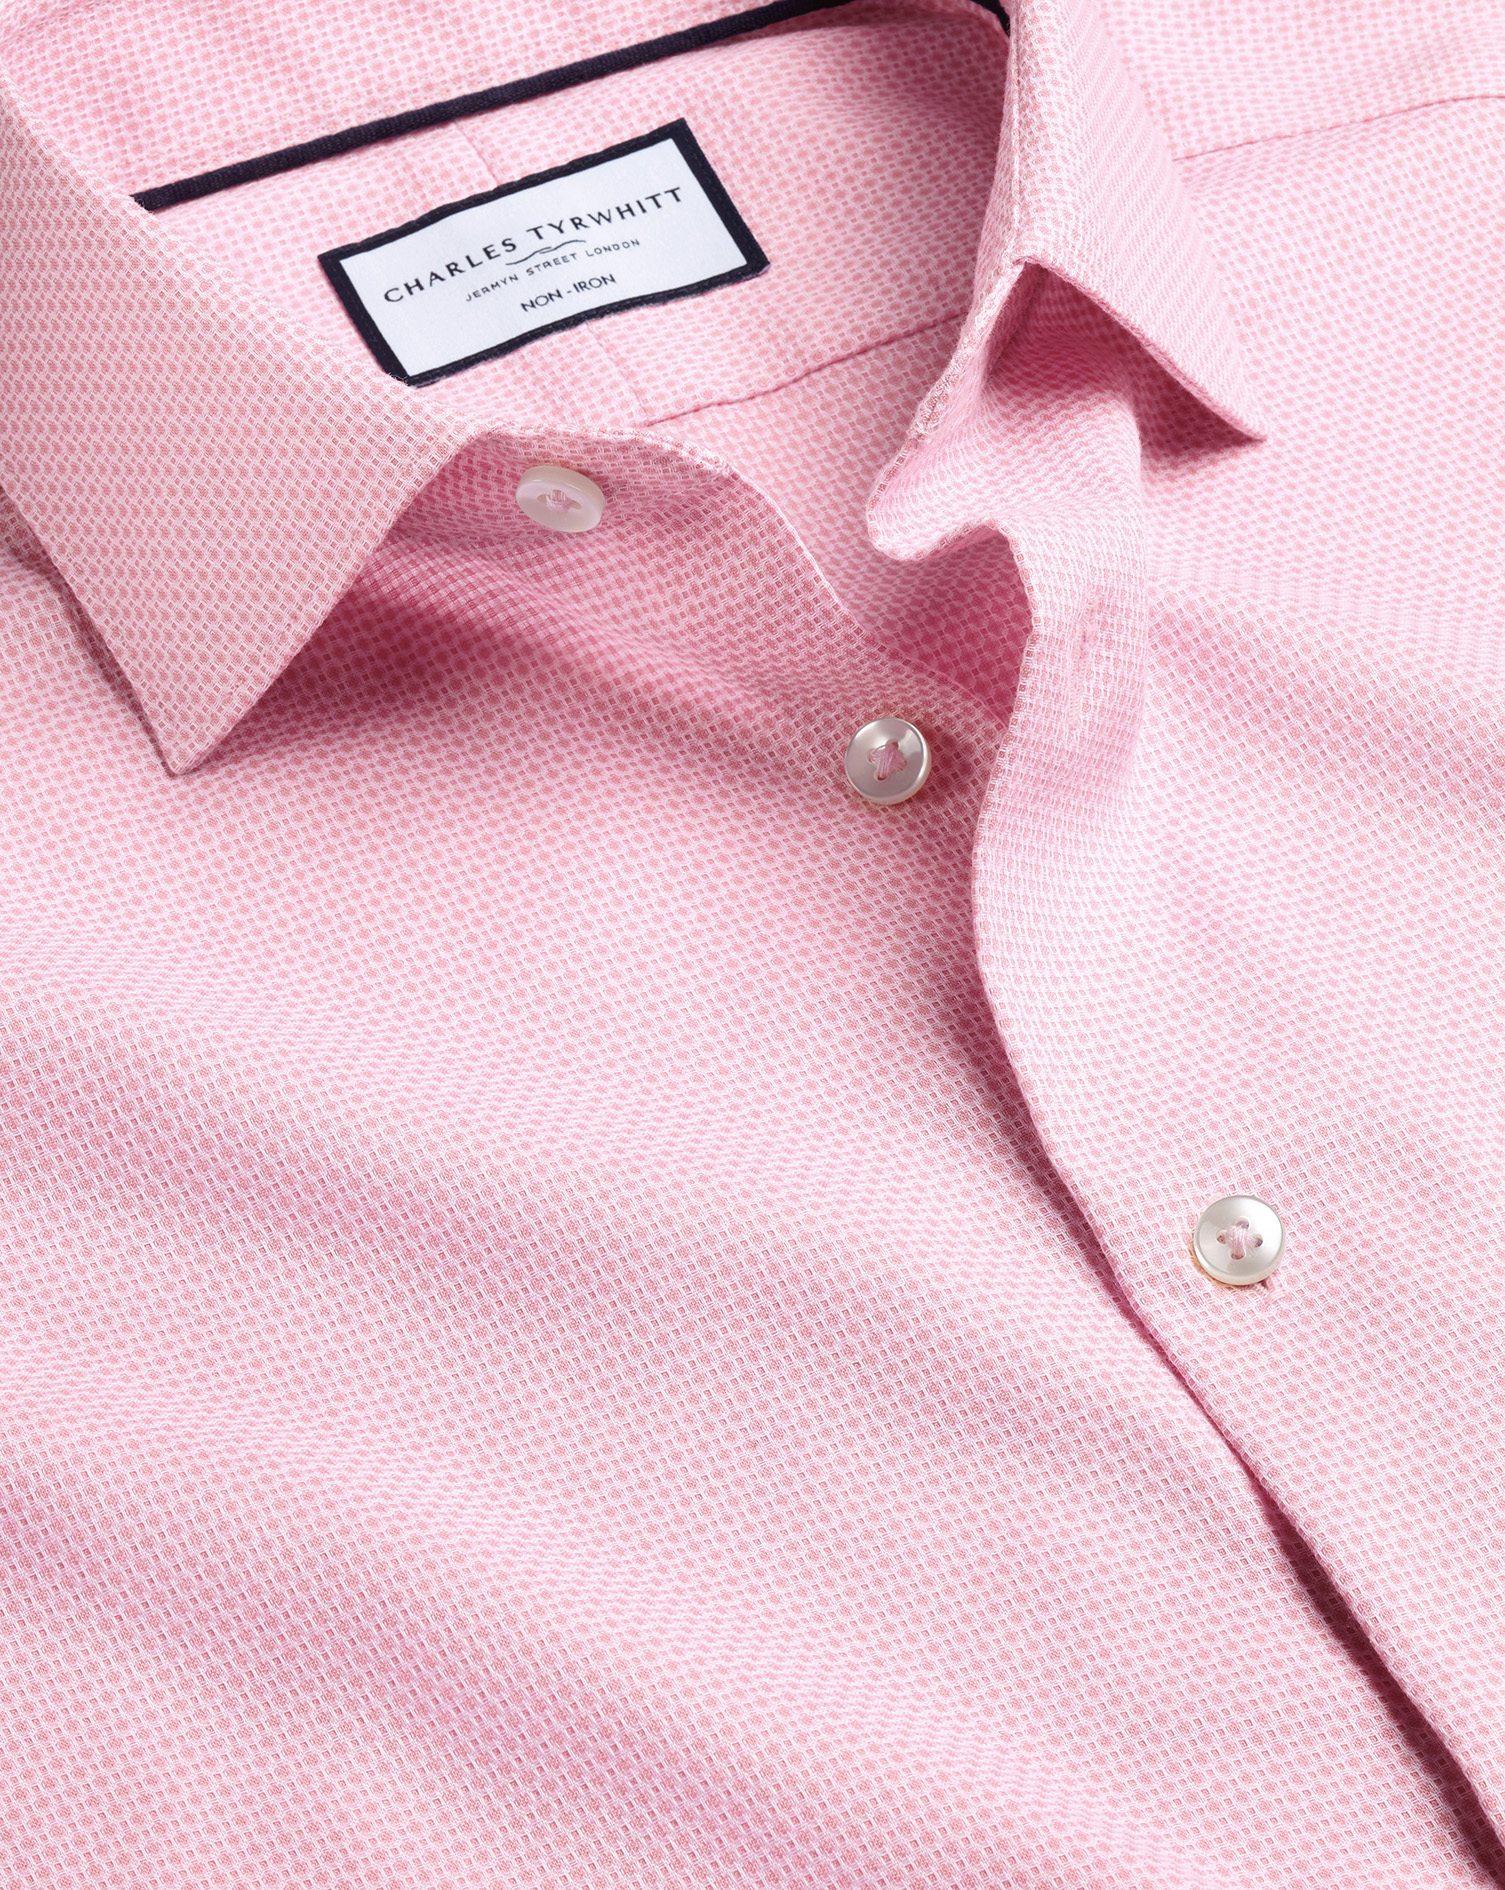 Men's Charles Tyrwhitt Non-Iron Stretch Texture Oval Dress Shirt - Pink Single Cuff Size 18/35 Cotto